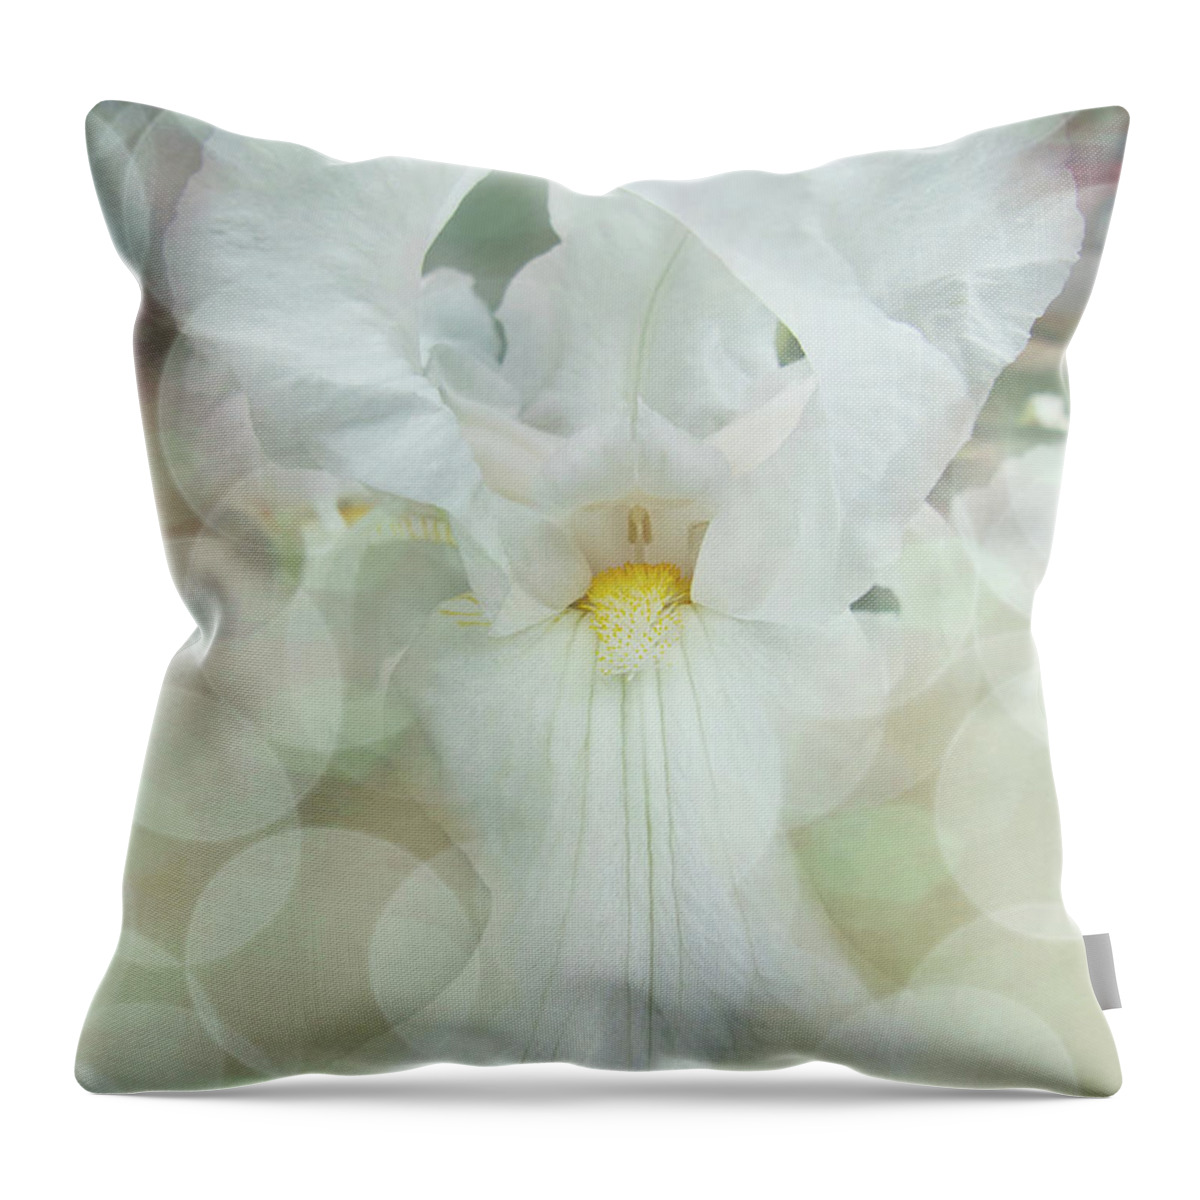 Iris Throw Pillow featuring the digital art Heavenly Iris by Amy Dundon